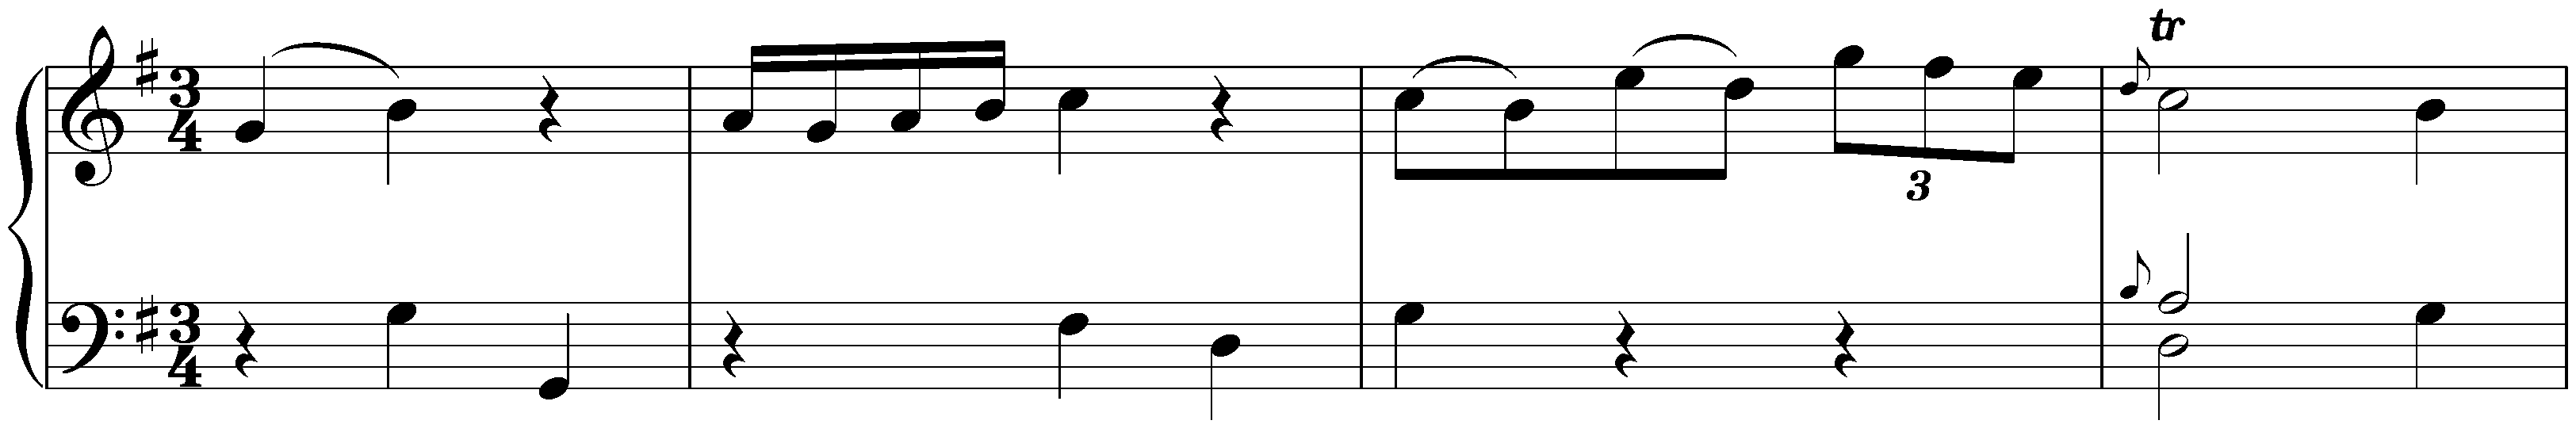 Sonata in G major, Hob. XVI:8; 2. Menuet